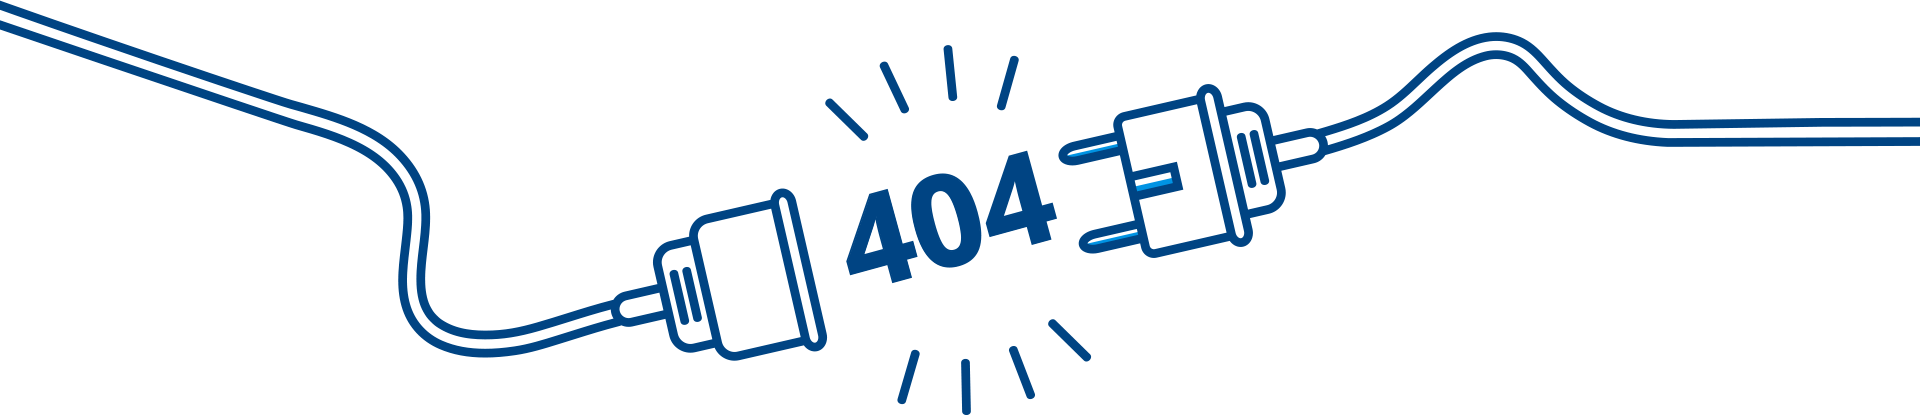 404-desktop